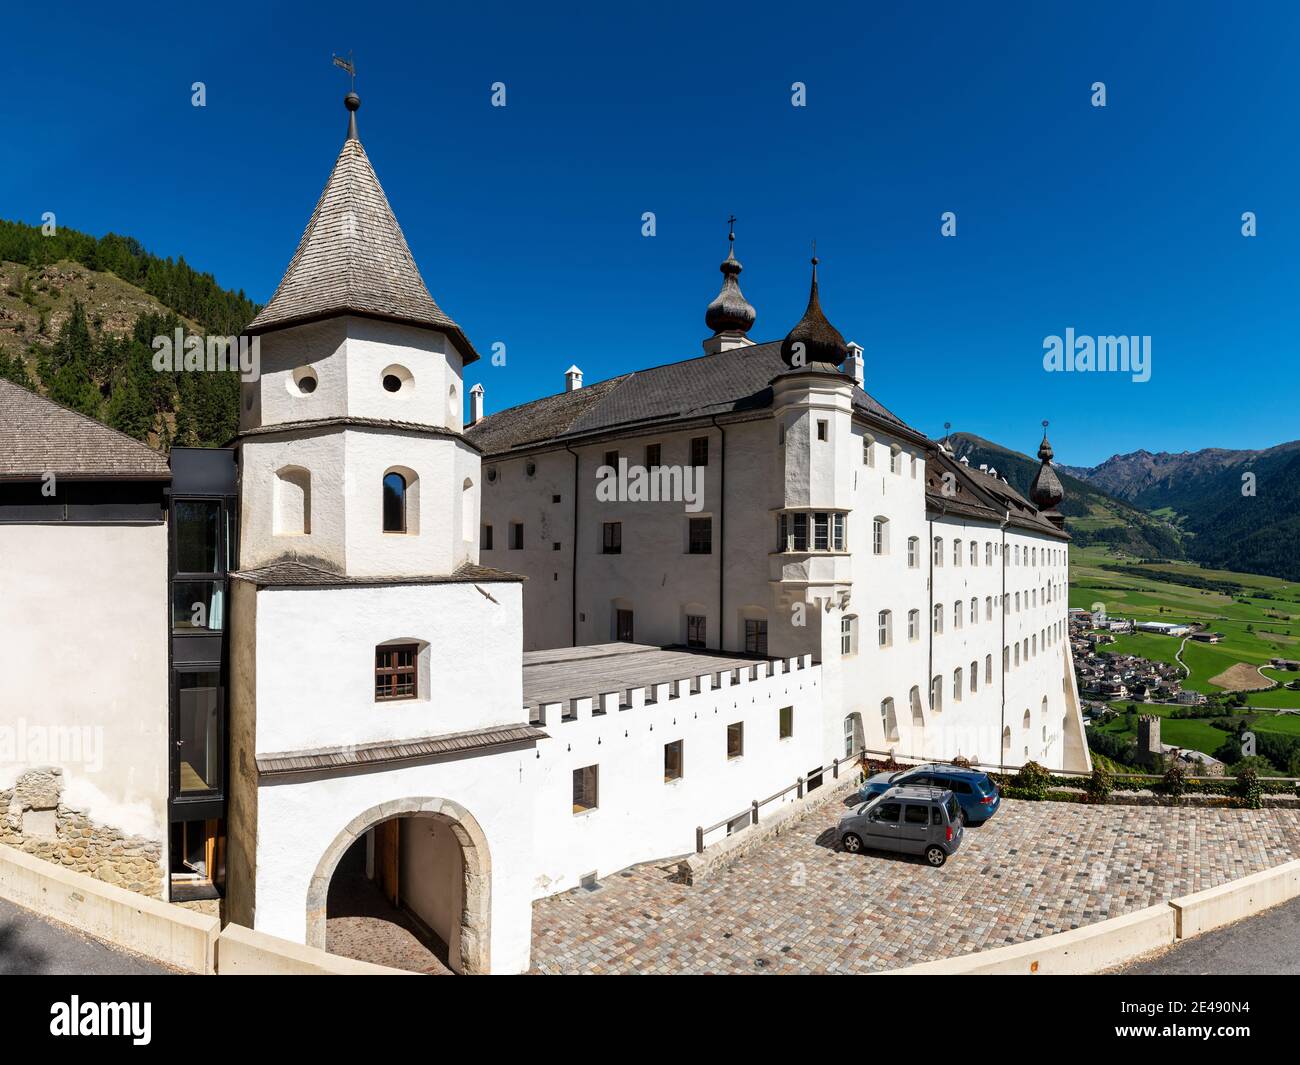 Monastery, abbey, bulwark, outer facade, mountain pastures, alpine pastures, blue sky, summer, church tower Stock Photo